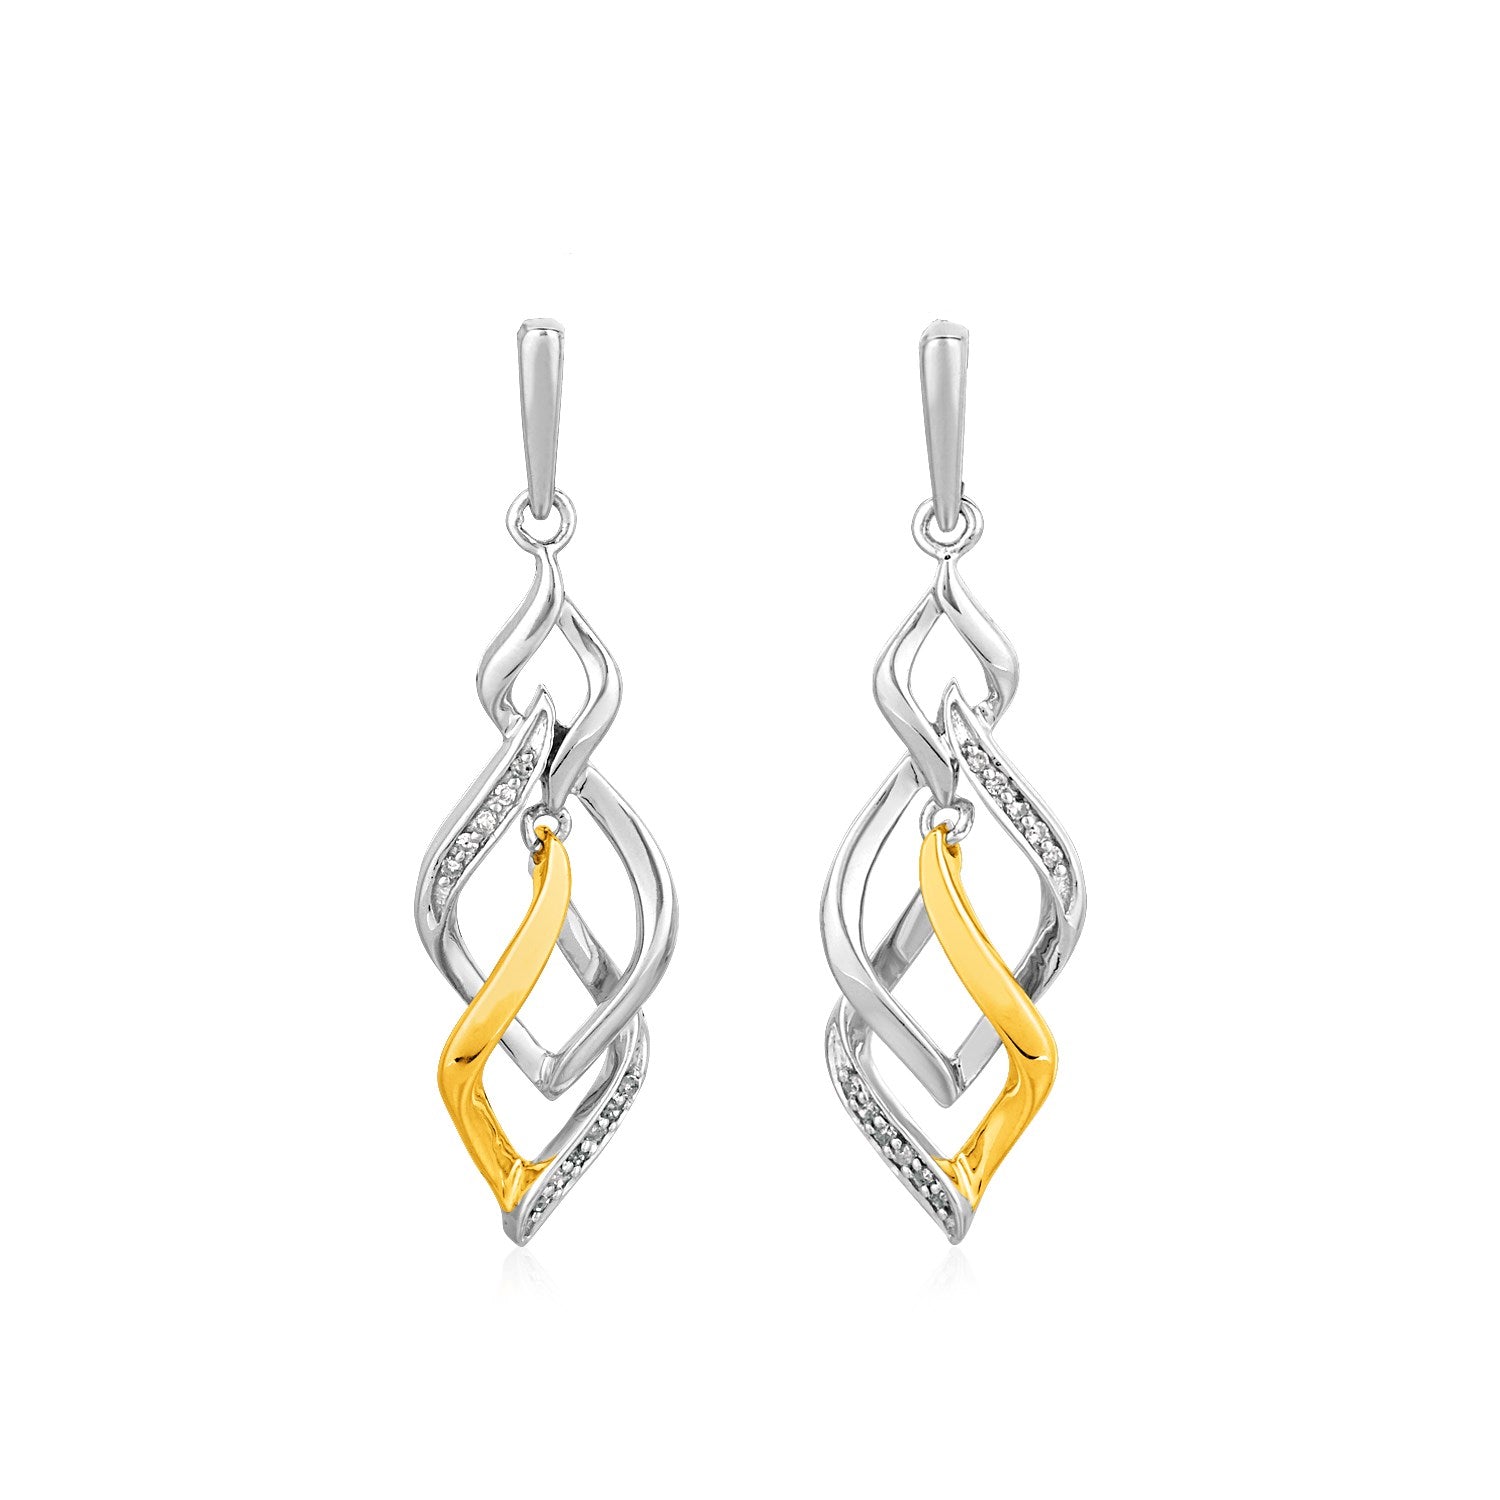 Two Toned Interlocking Twist Earrings with Diamonds in Sterling Silver